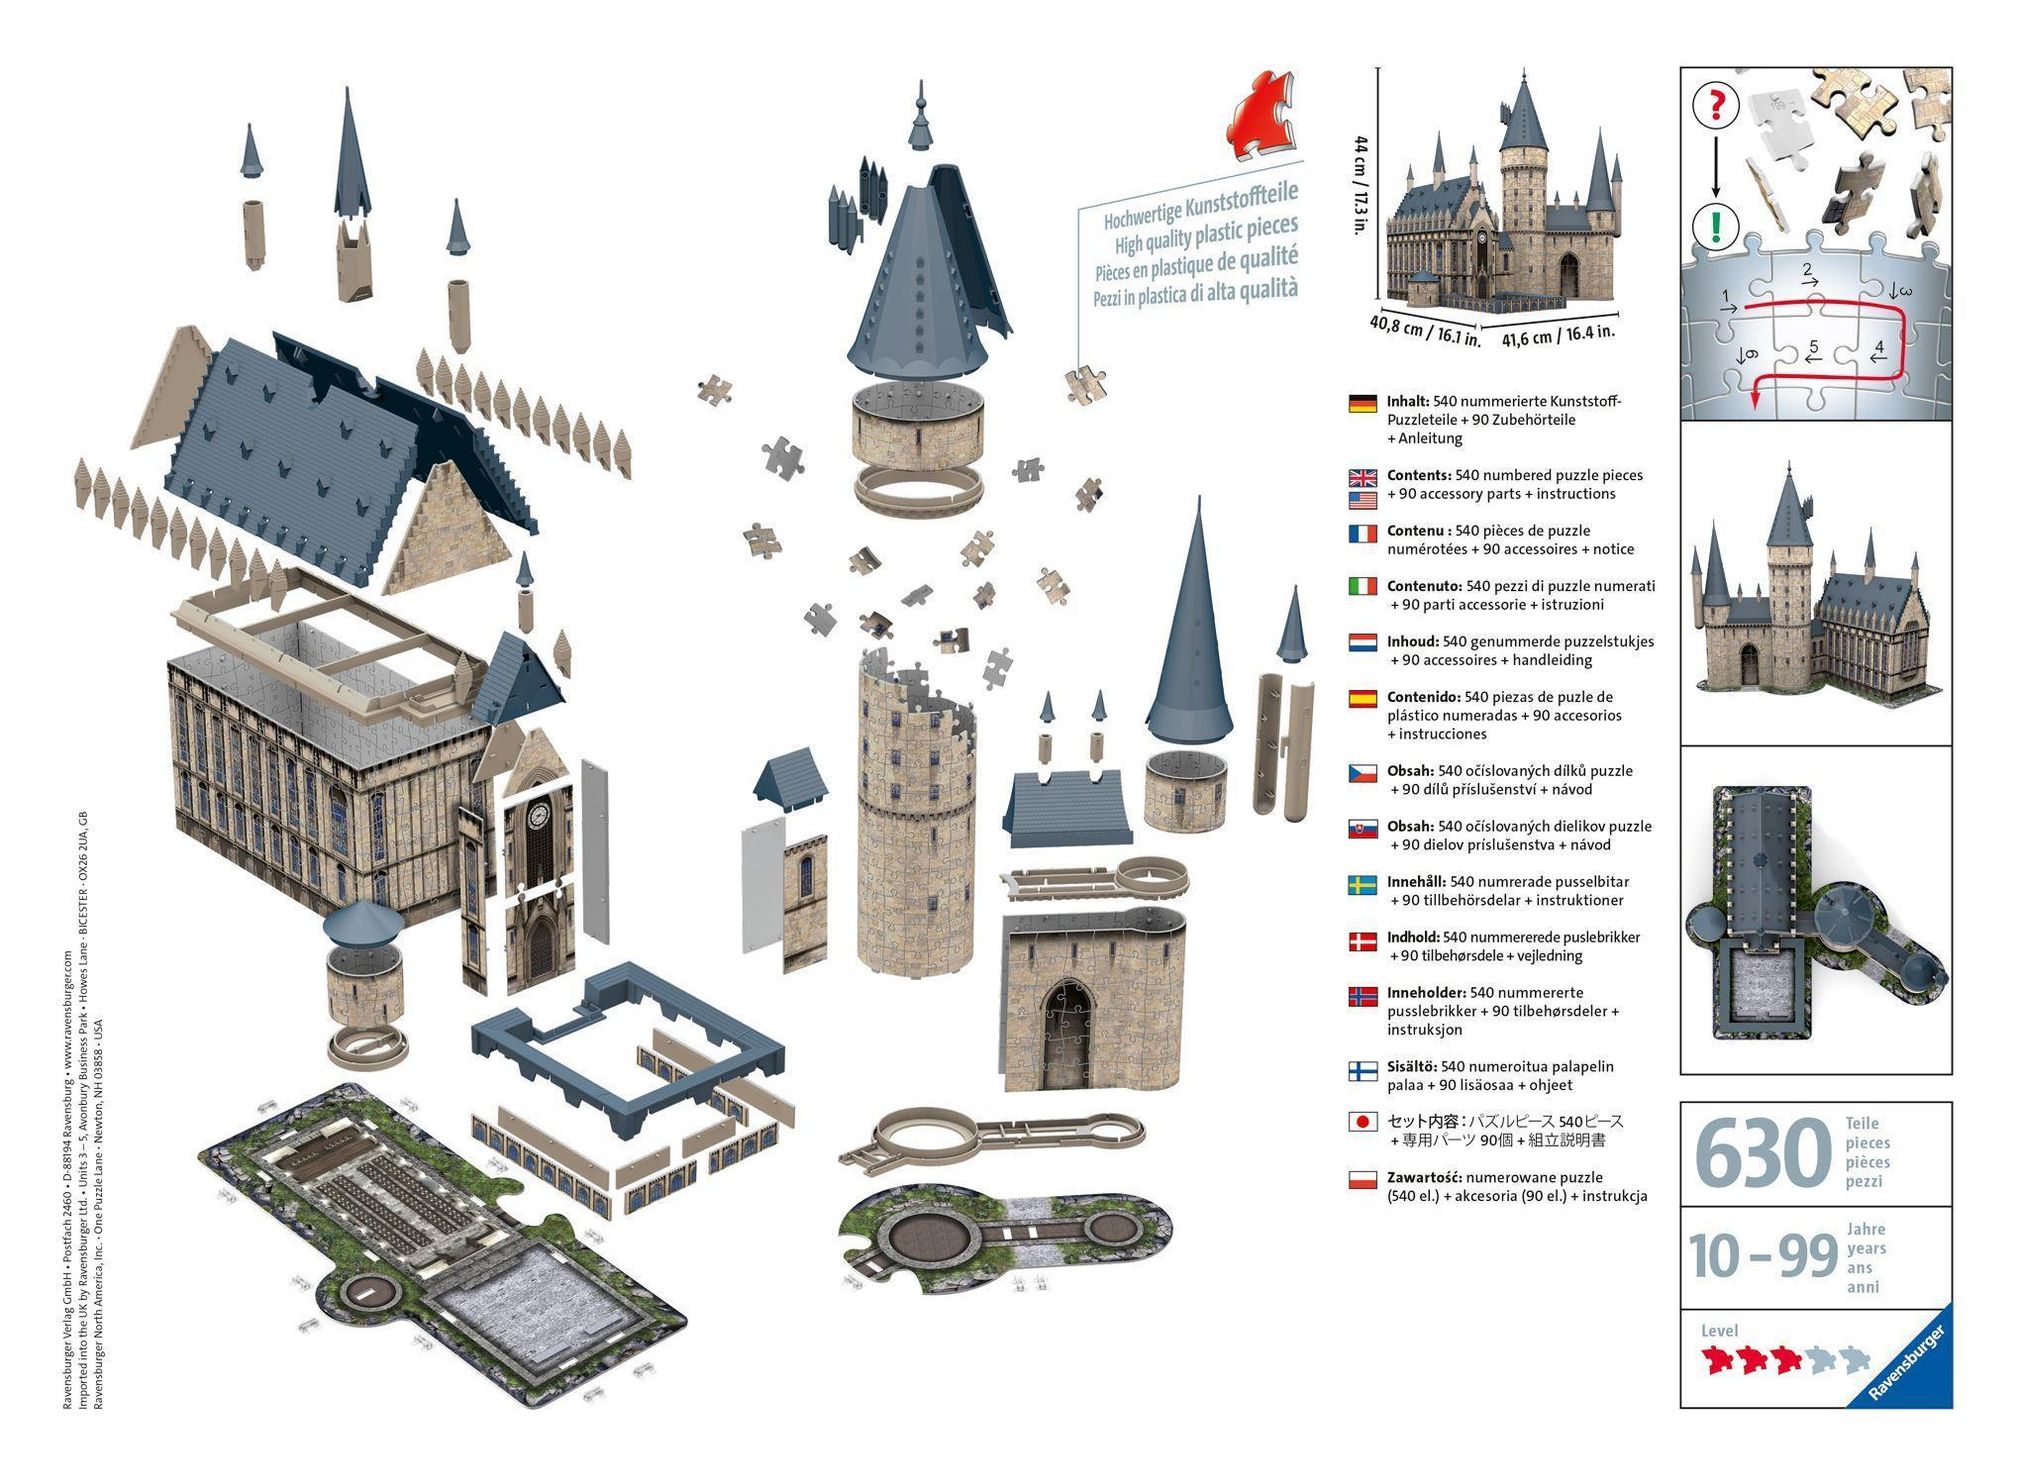 Ravensburger 3D Puzzle 11259 - Harry Potter Hogwarts Schloss - Die Große  Halle - 540 Teile - Für alle Harry Potter Fans ab 10 Jahren | Weltbild.at